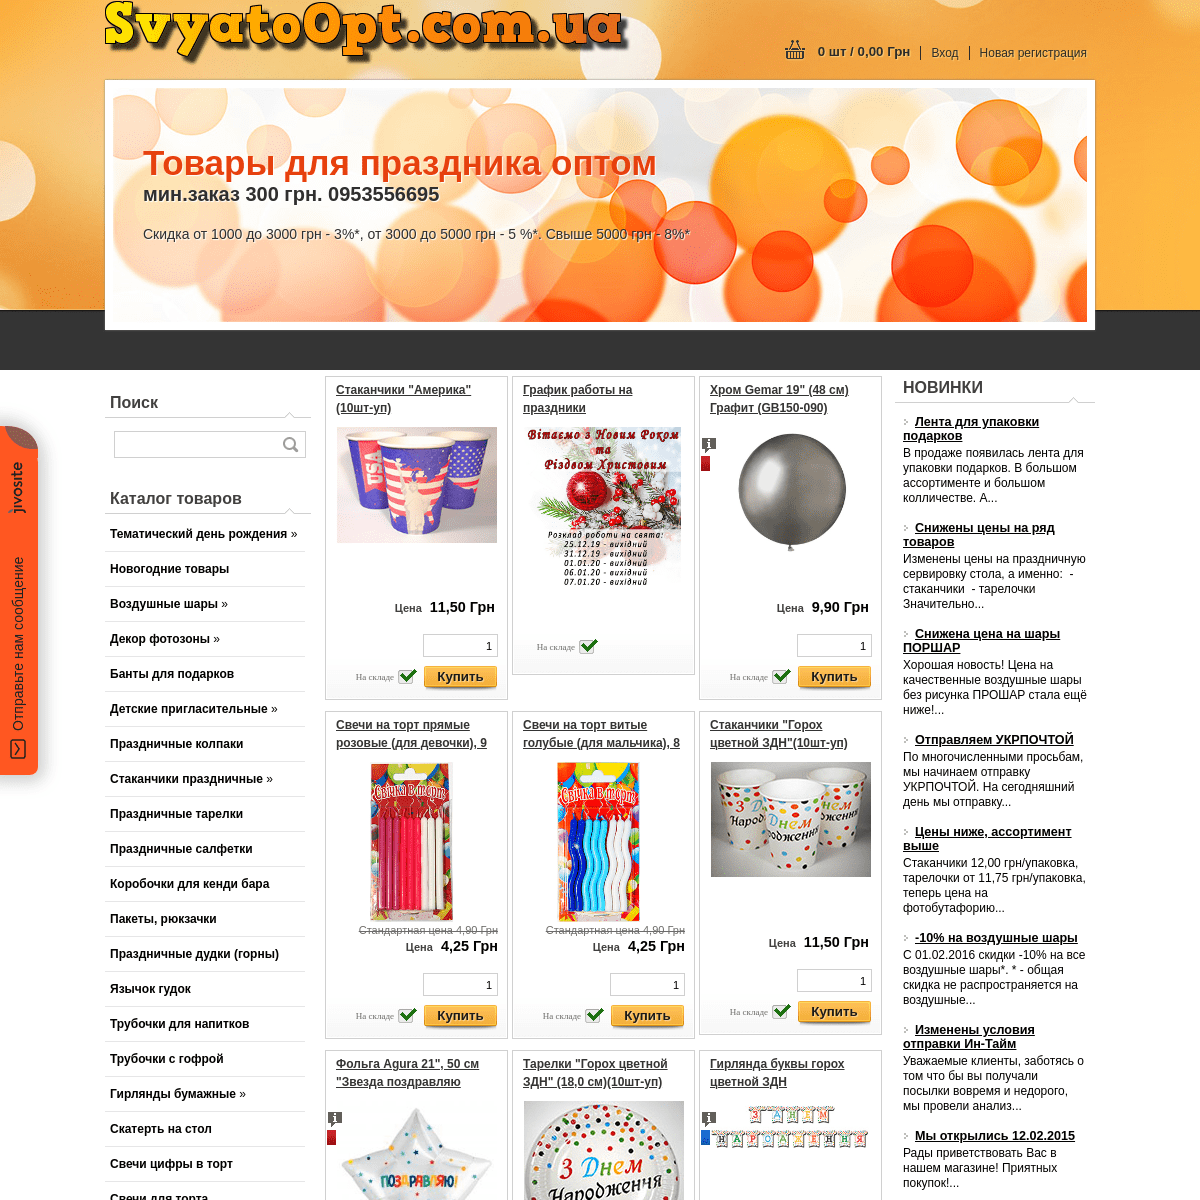 A complete backup of svyatoopt.com.ua